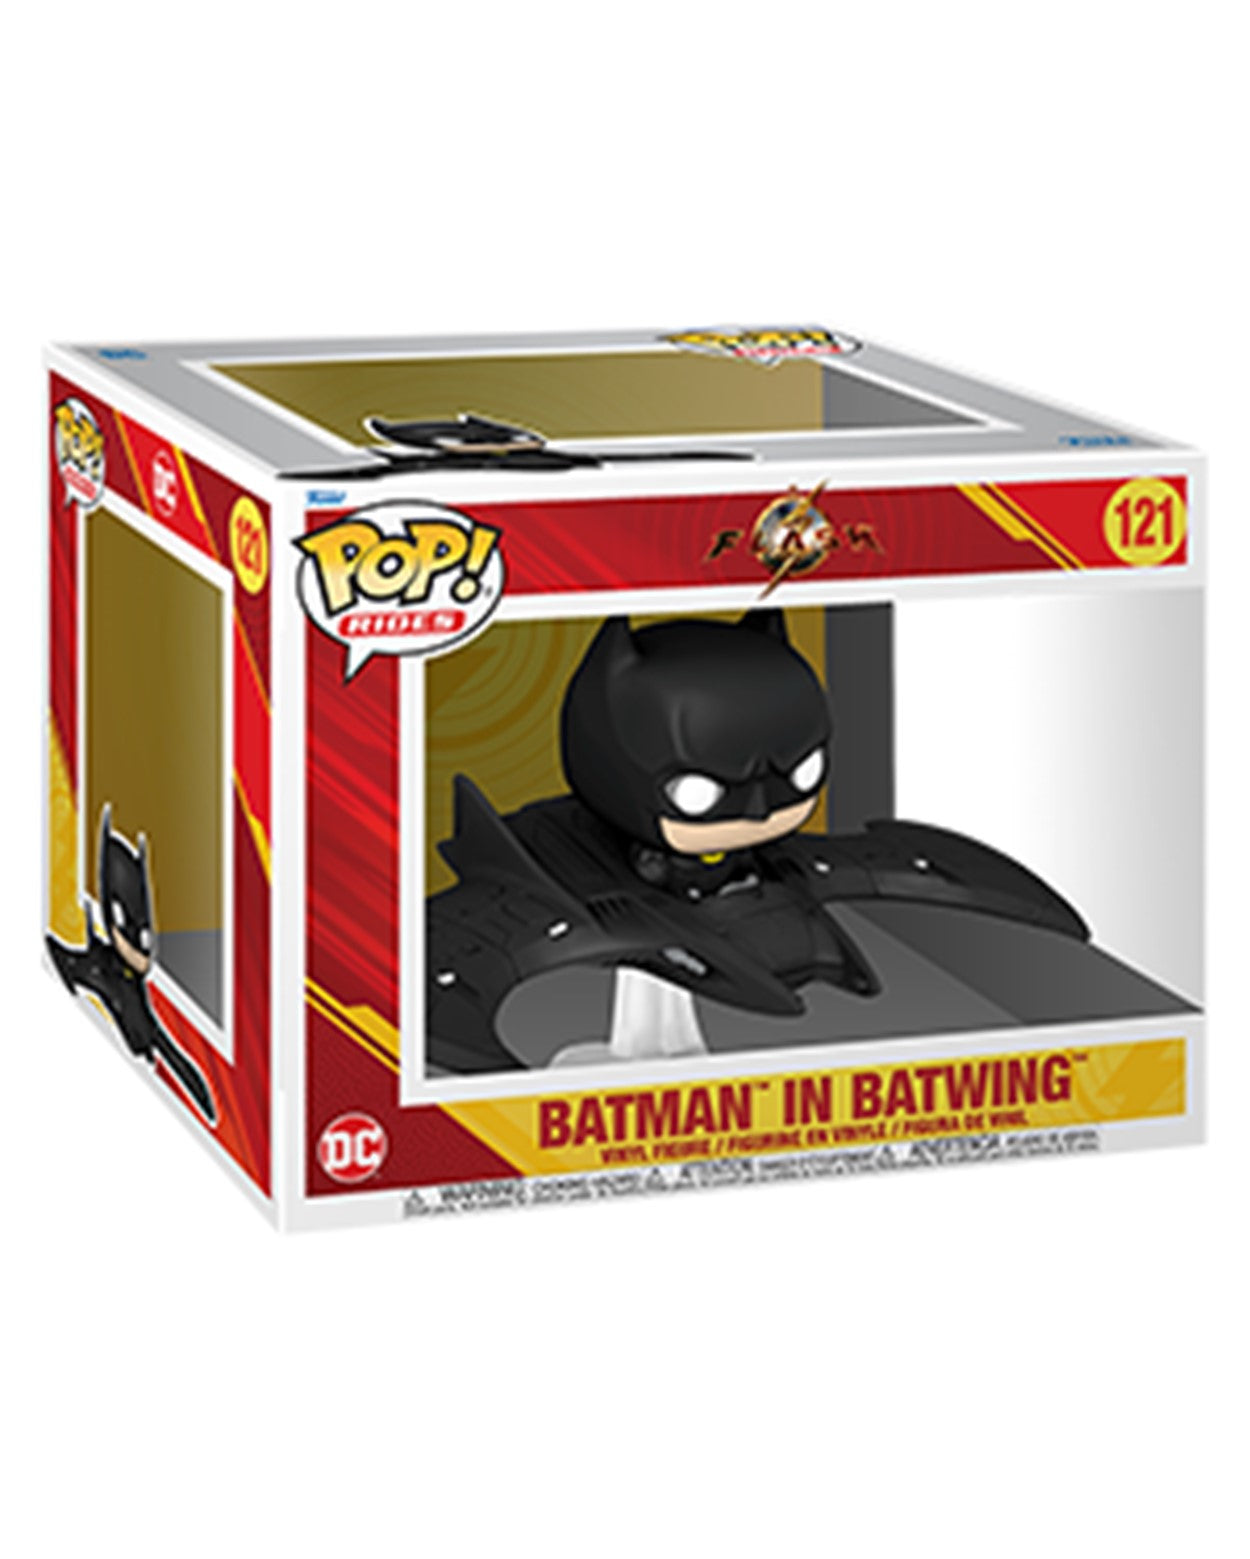 POP! Rides Heroes The Flash Vinyl Figure Batman in Batwing  Pixie Candy Shoppe   